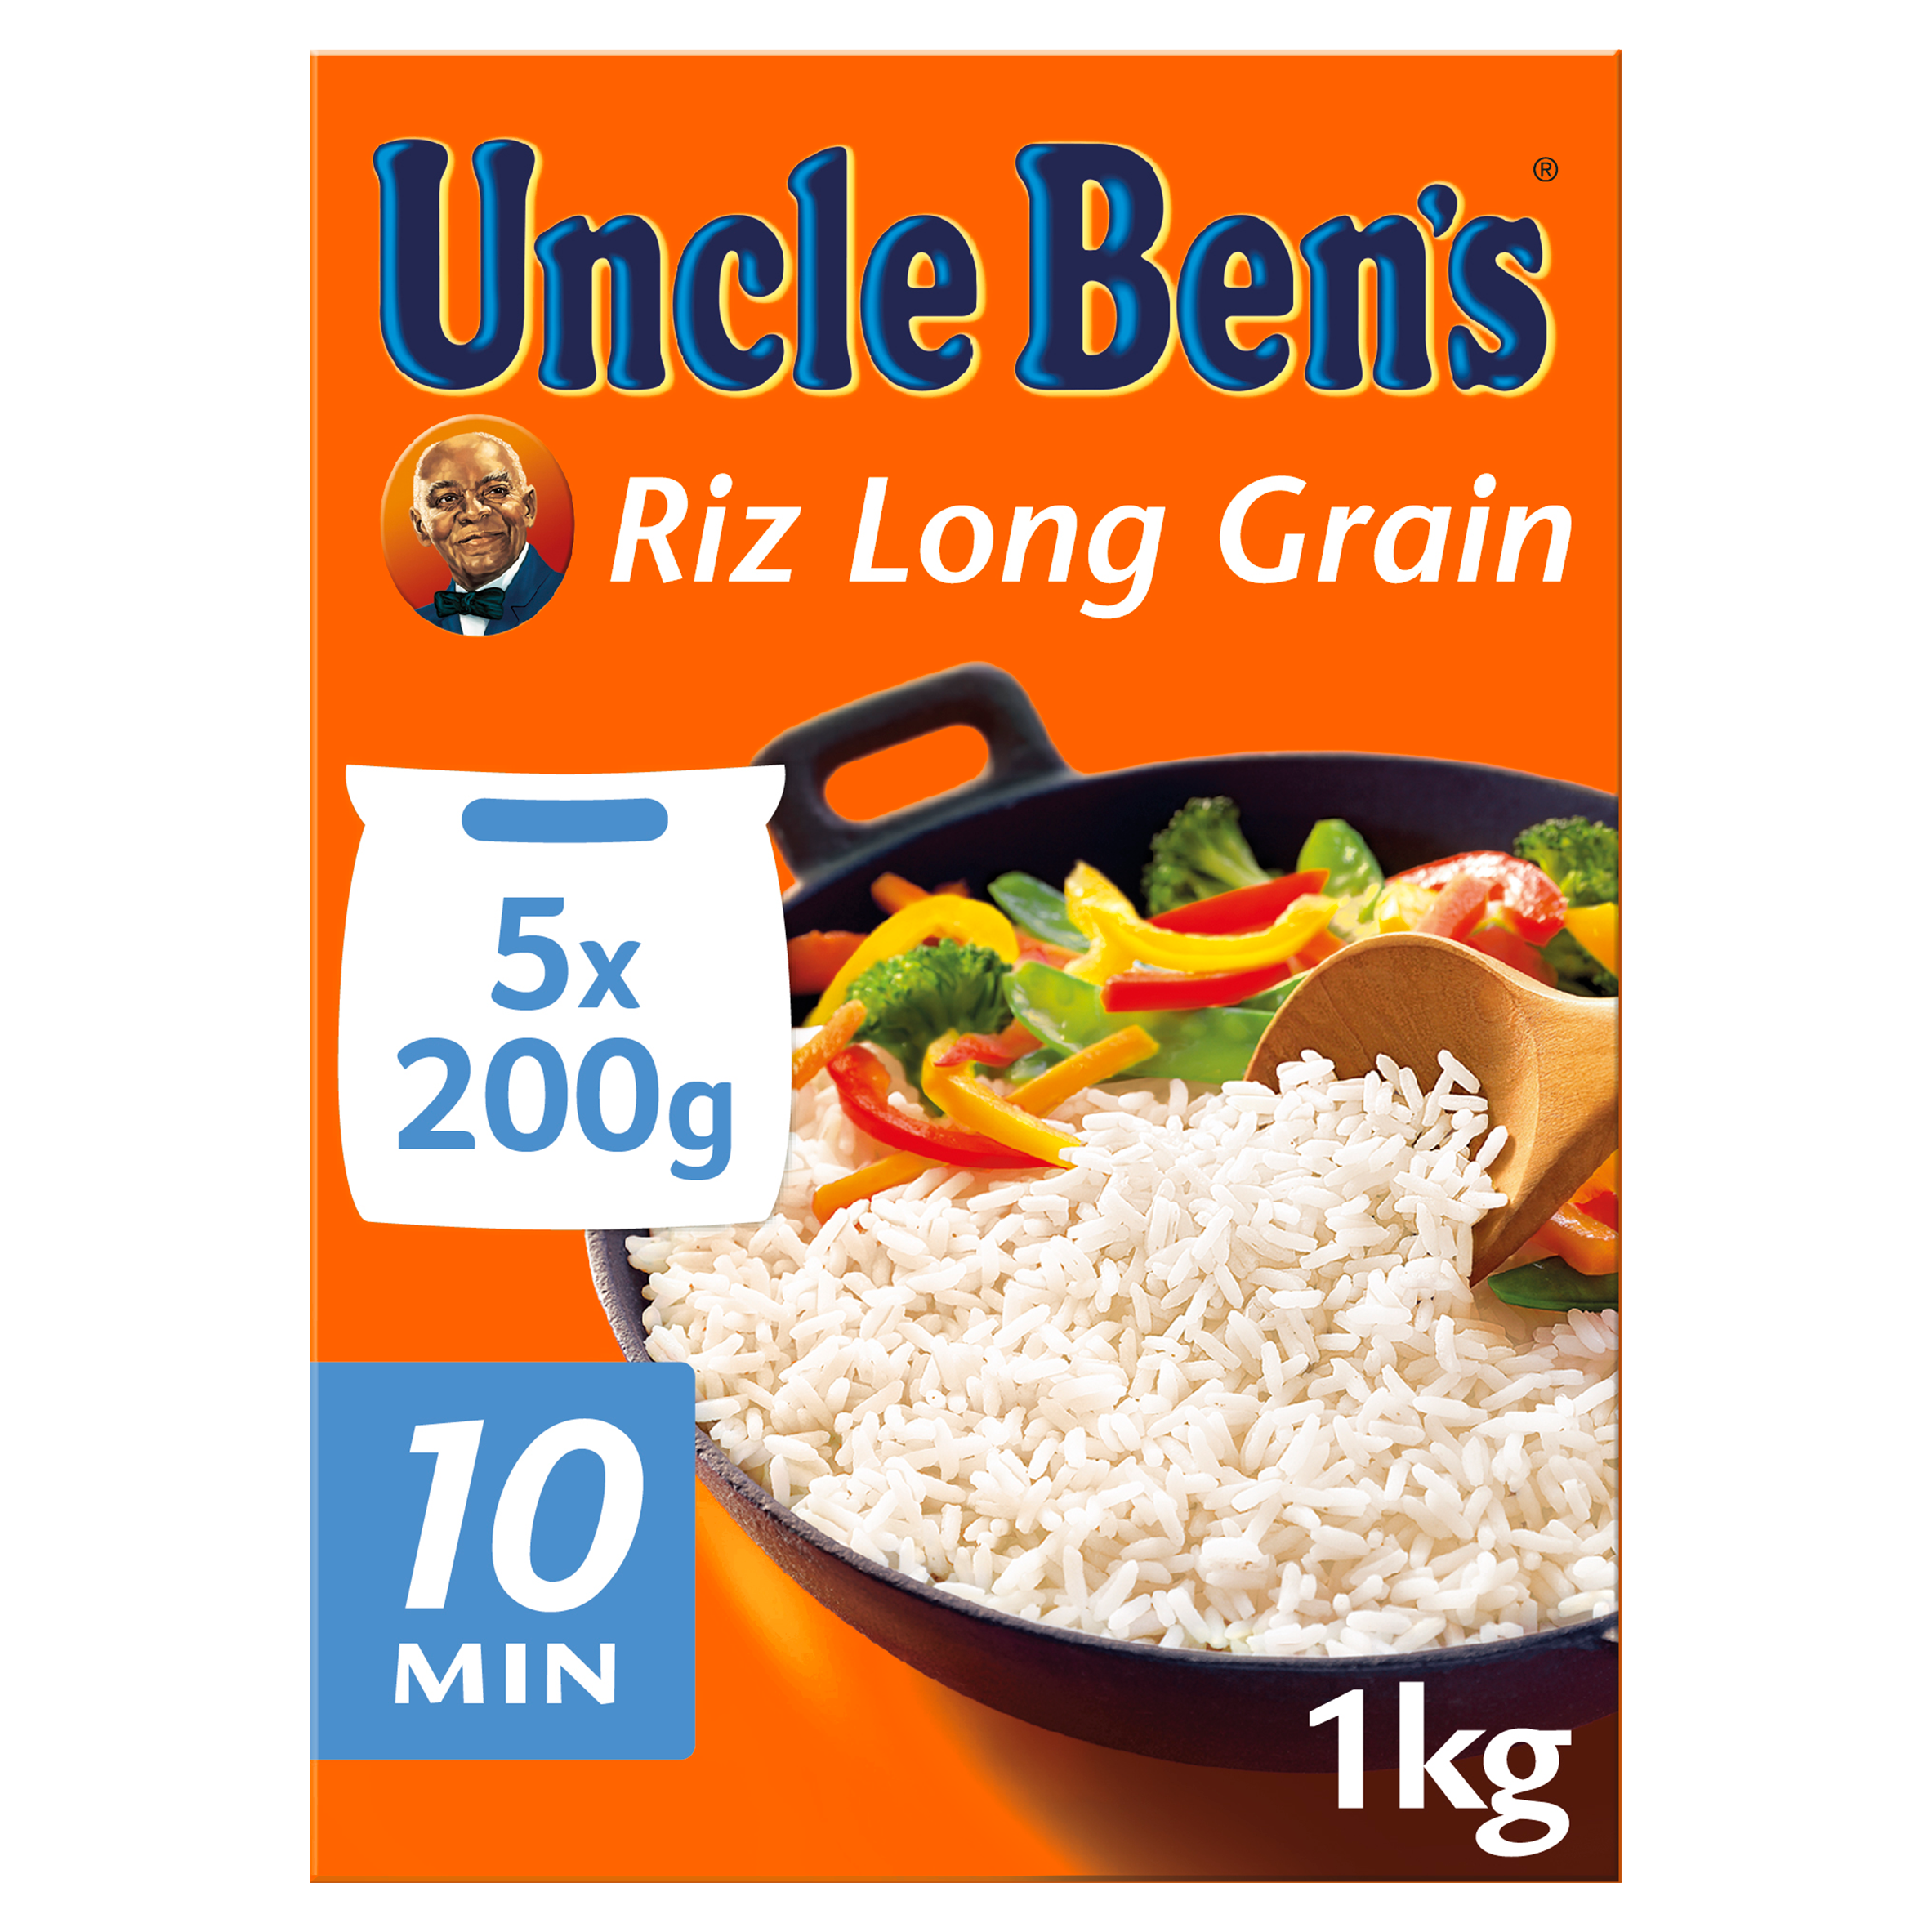 BEN'S ORIGINAL Riz long grain 10 min 1Kg